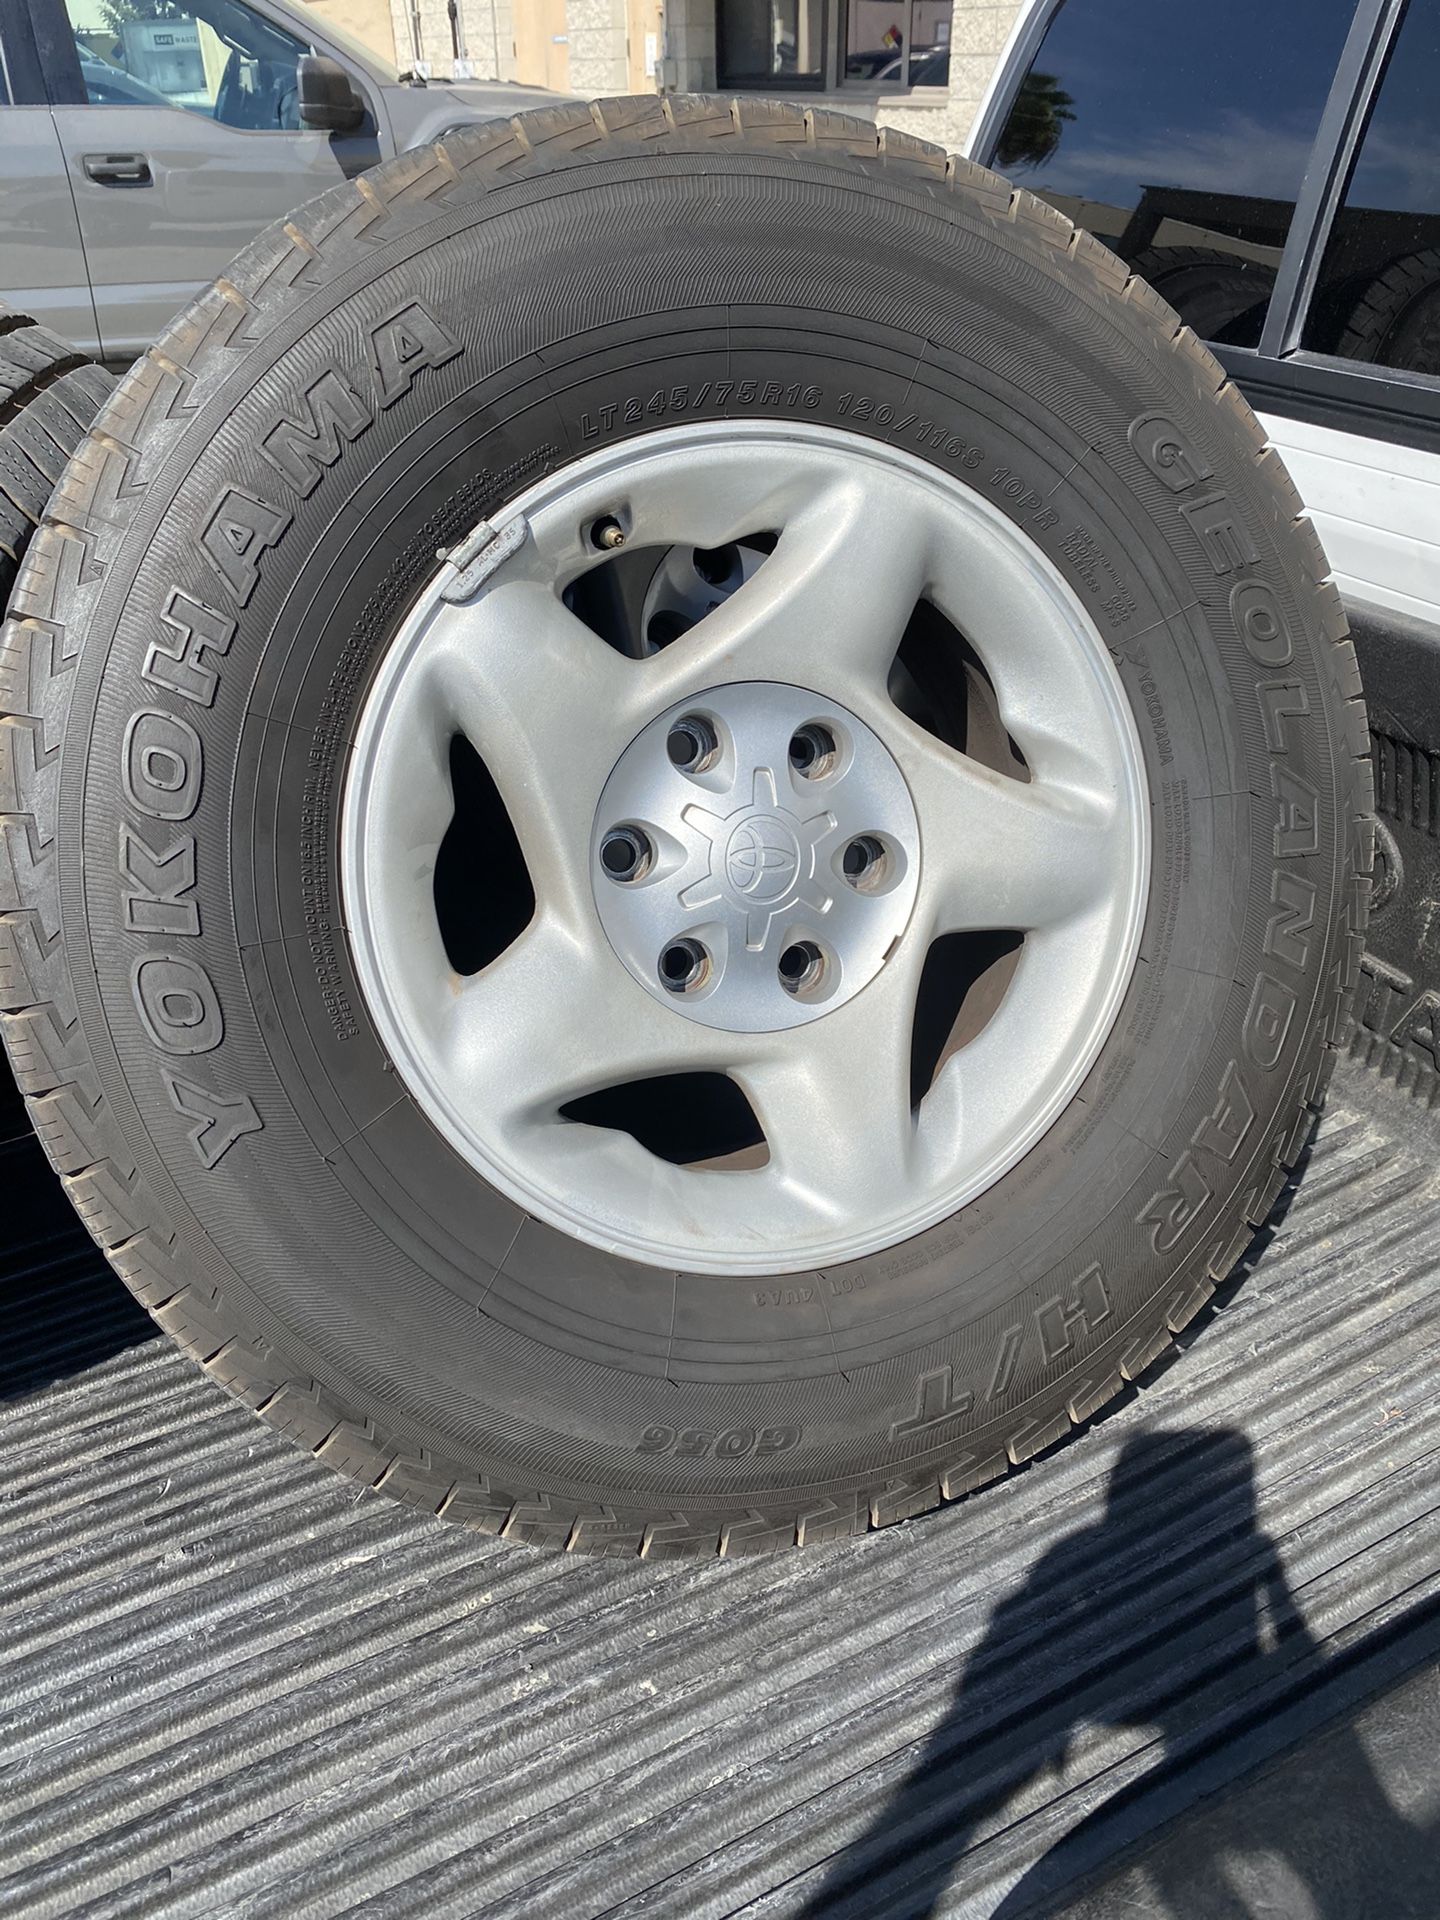 245/75/16 Toyota Tacoma tundra 4runner wheels and tires